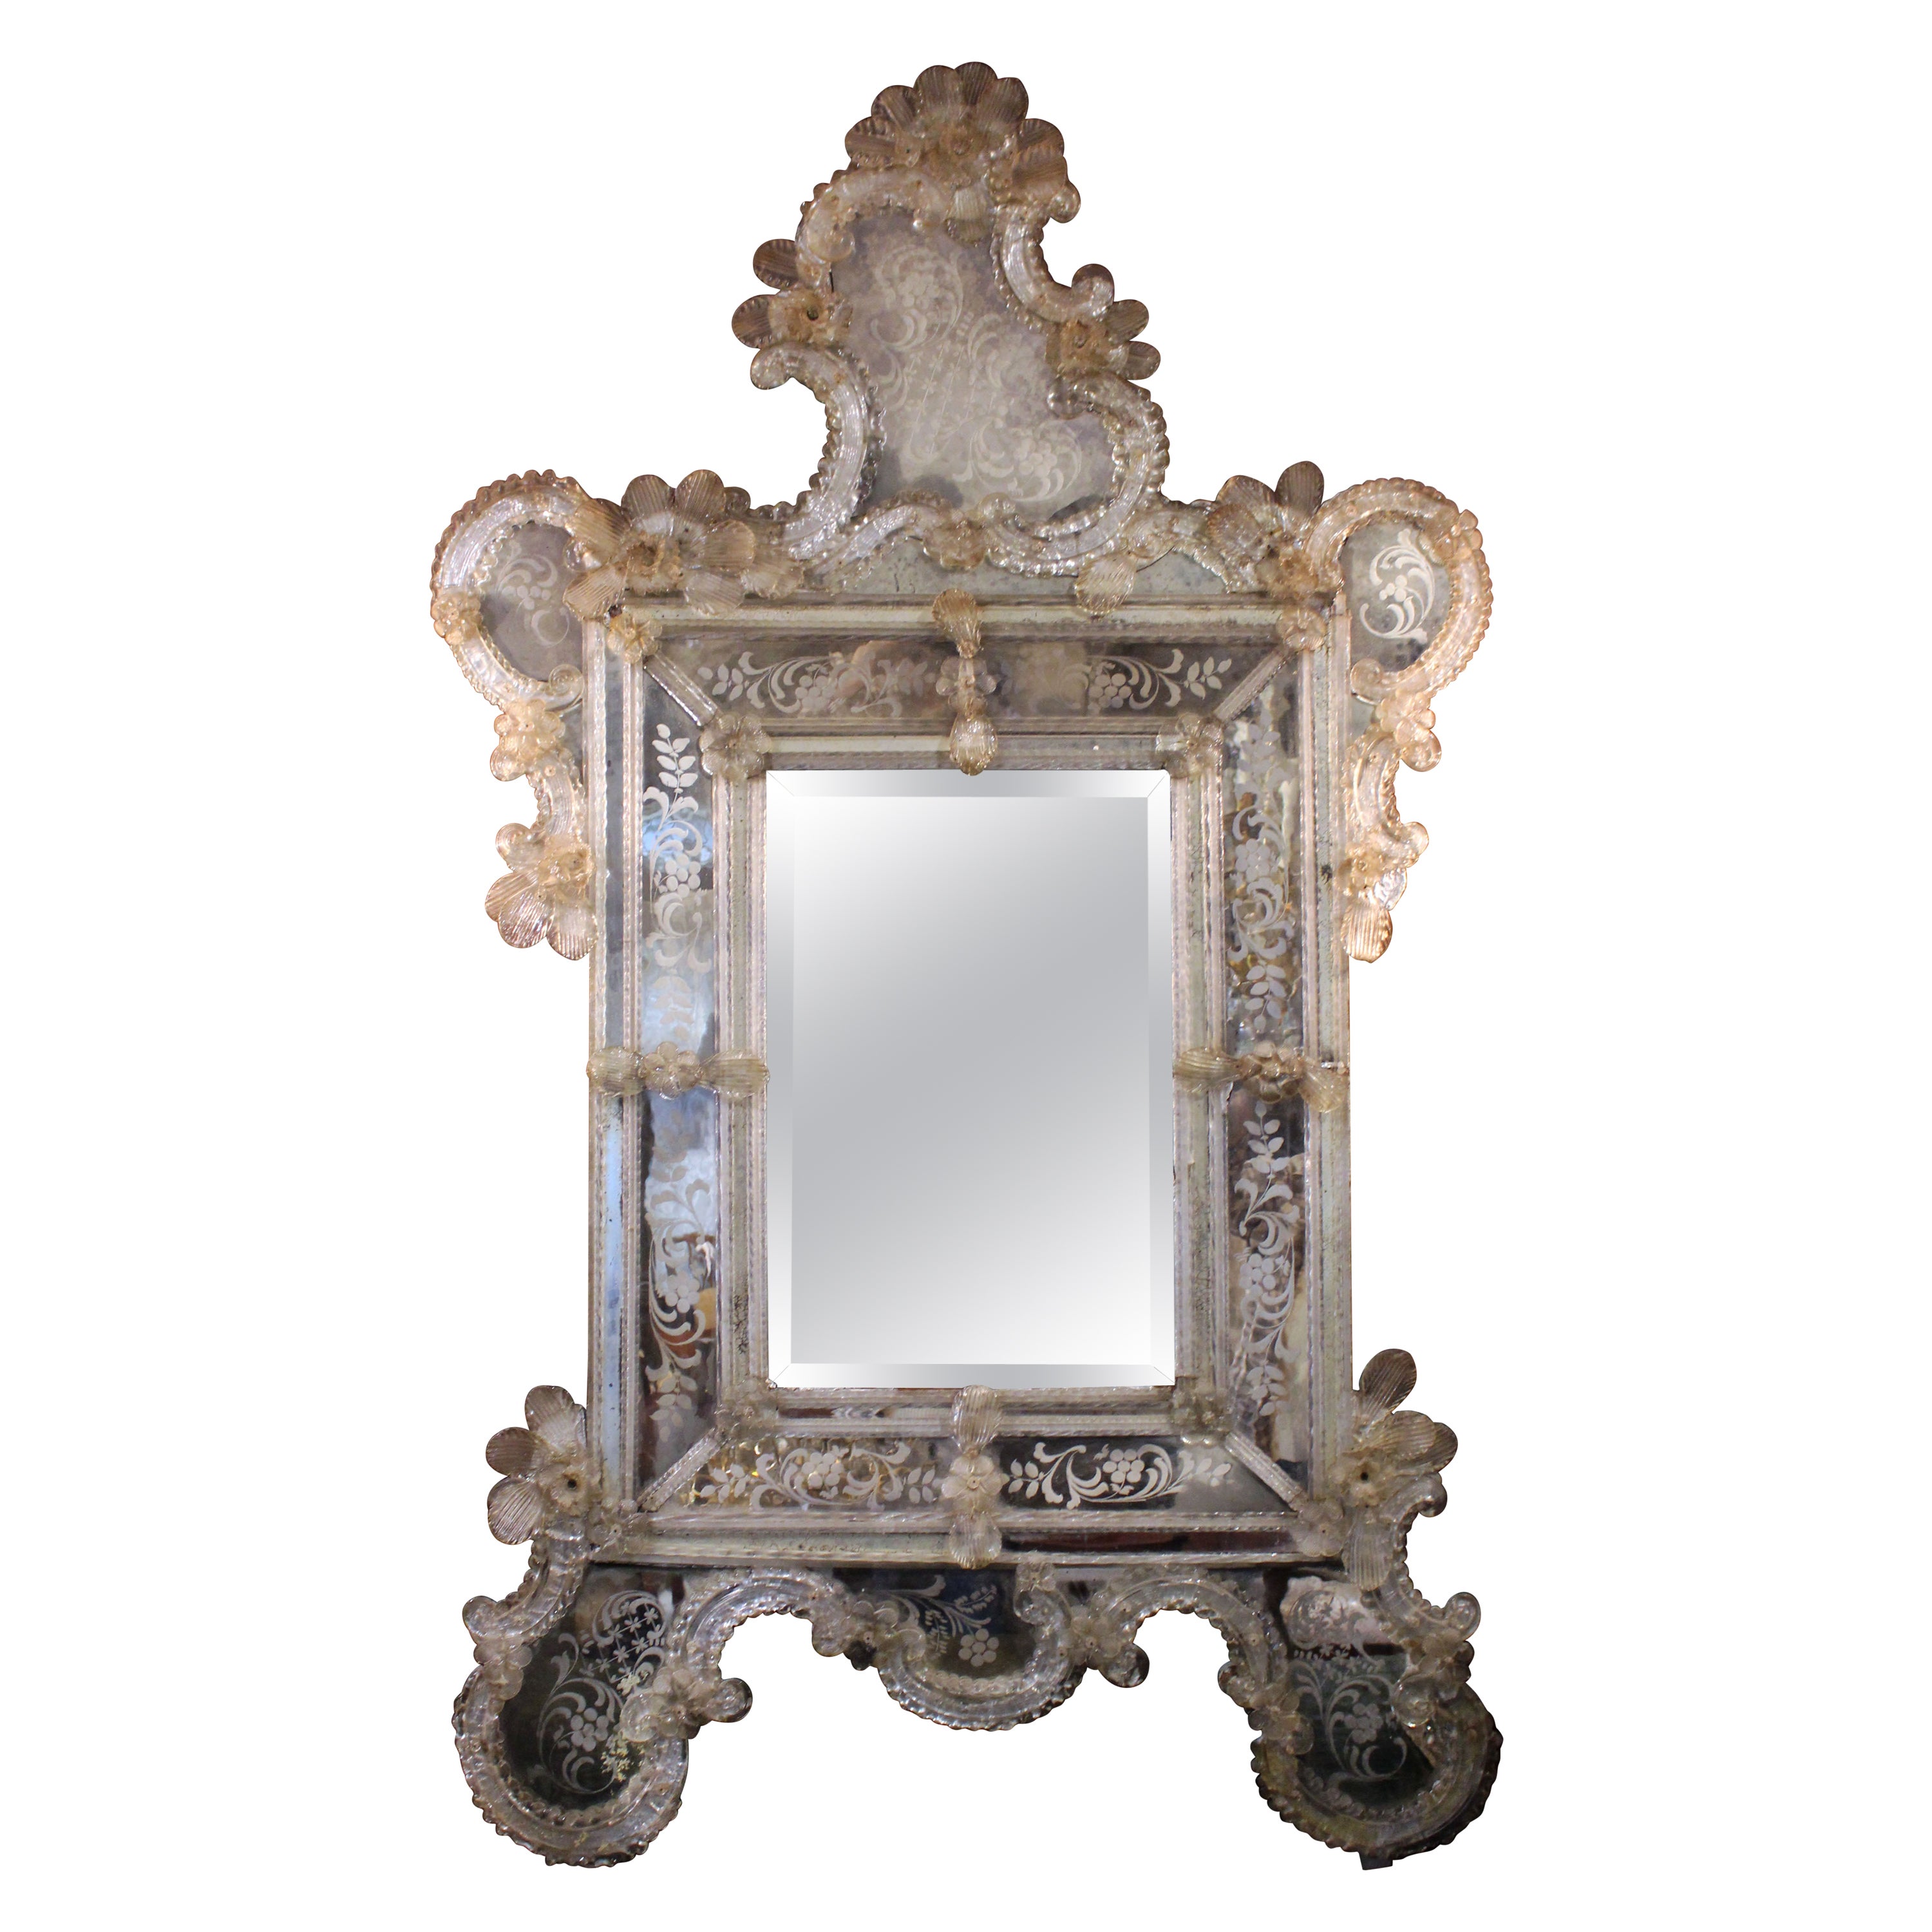 Early-Mid 19th Century Baroque-Rococo Transitional Revival Venetian Mirror